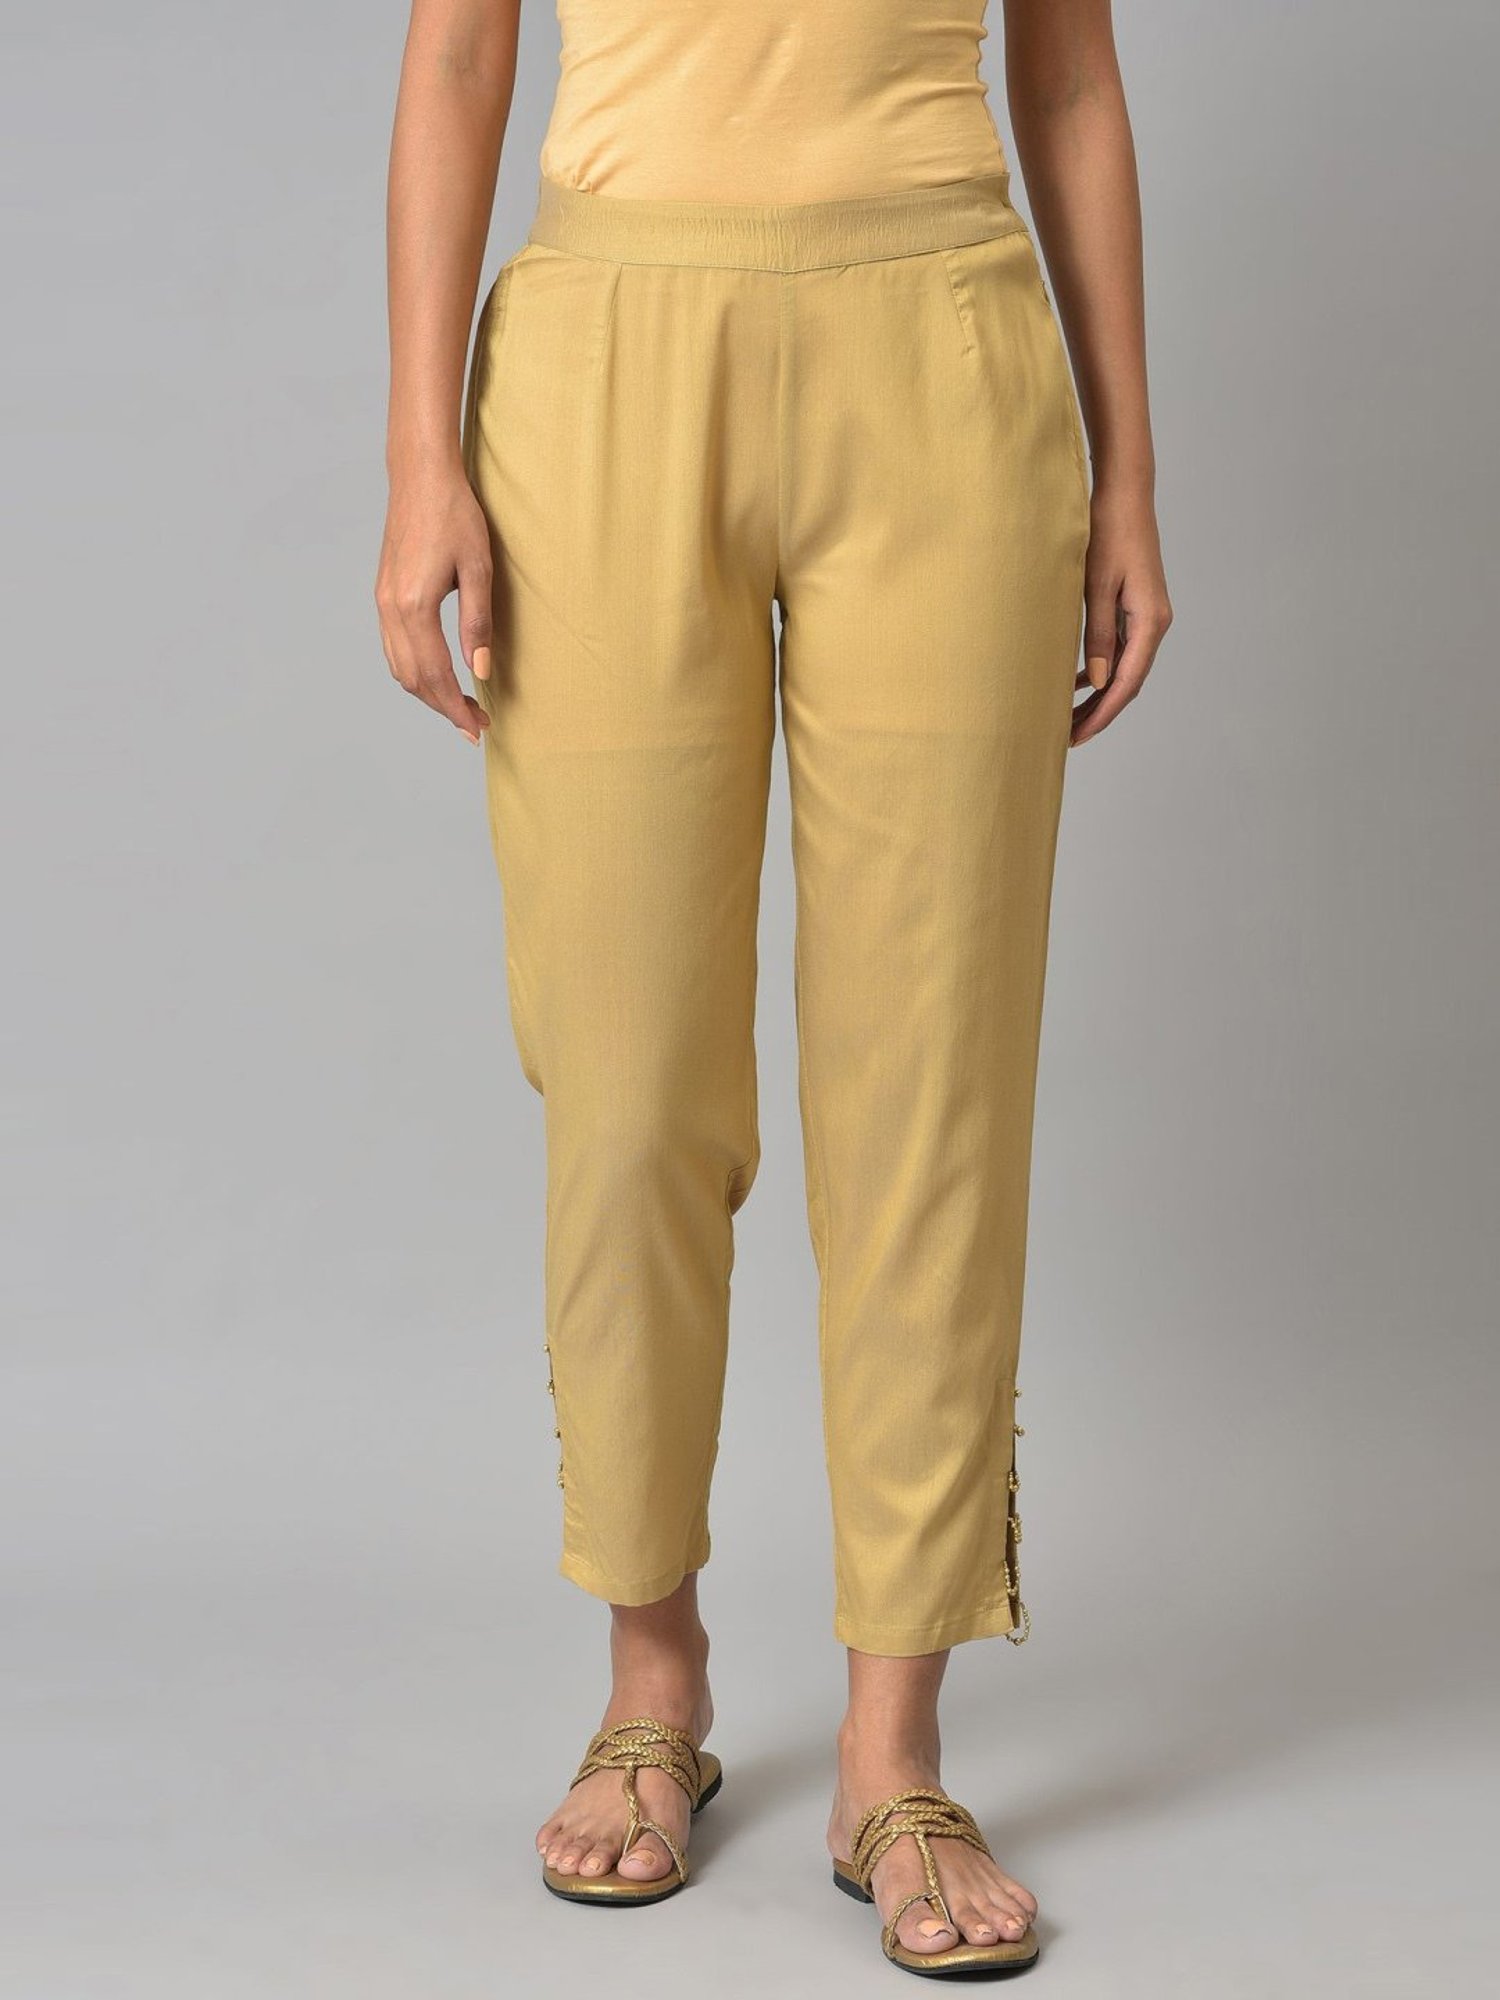 Buy Gold Pants for Women by AVAASA MIX N MATCH Online  Ajiocom